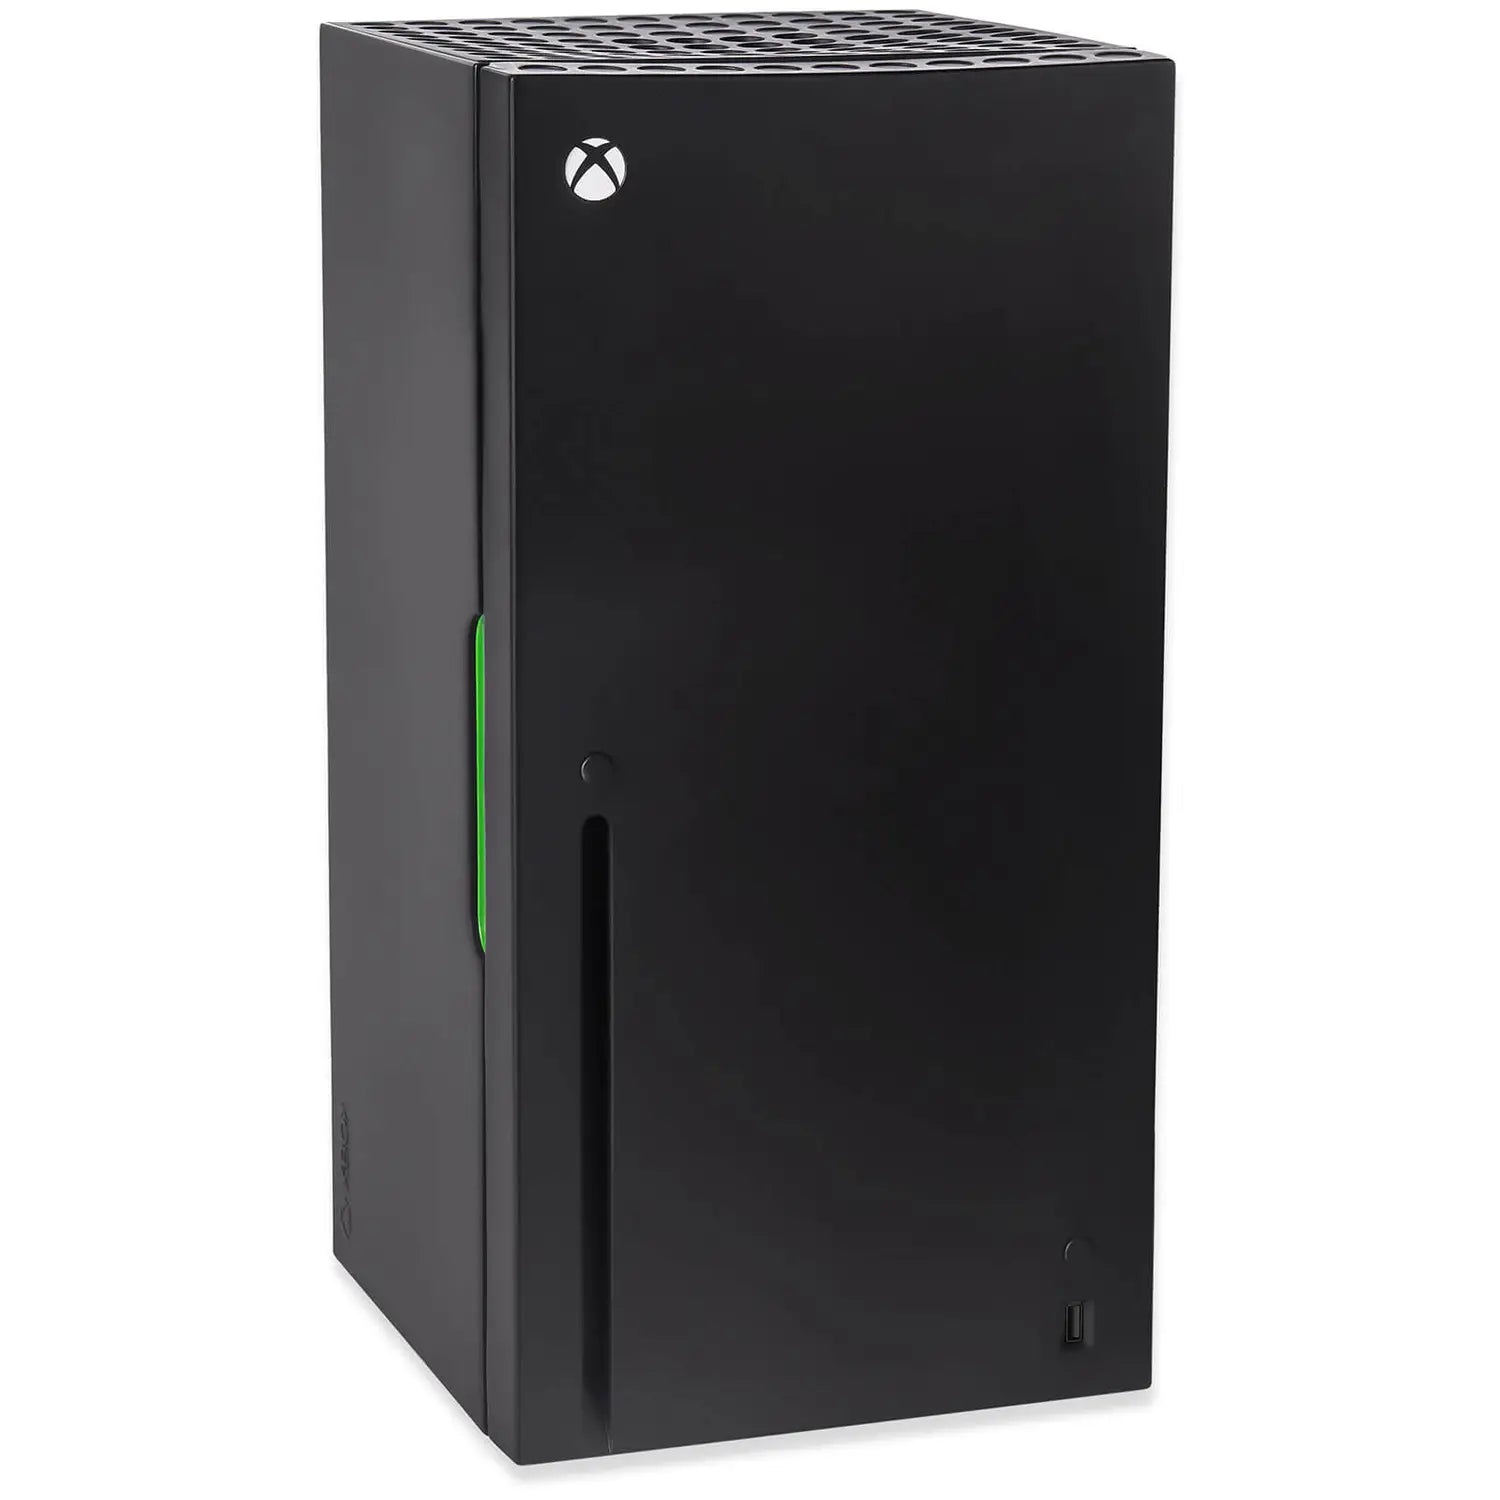 Microsoft Xbox Series X Mini Fridge (UK Plug) - Good Condition